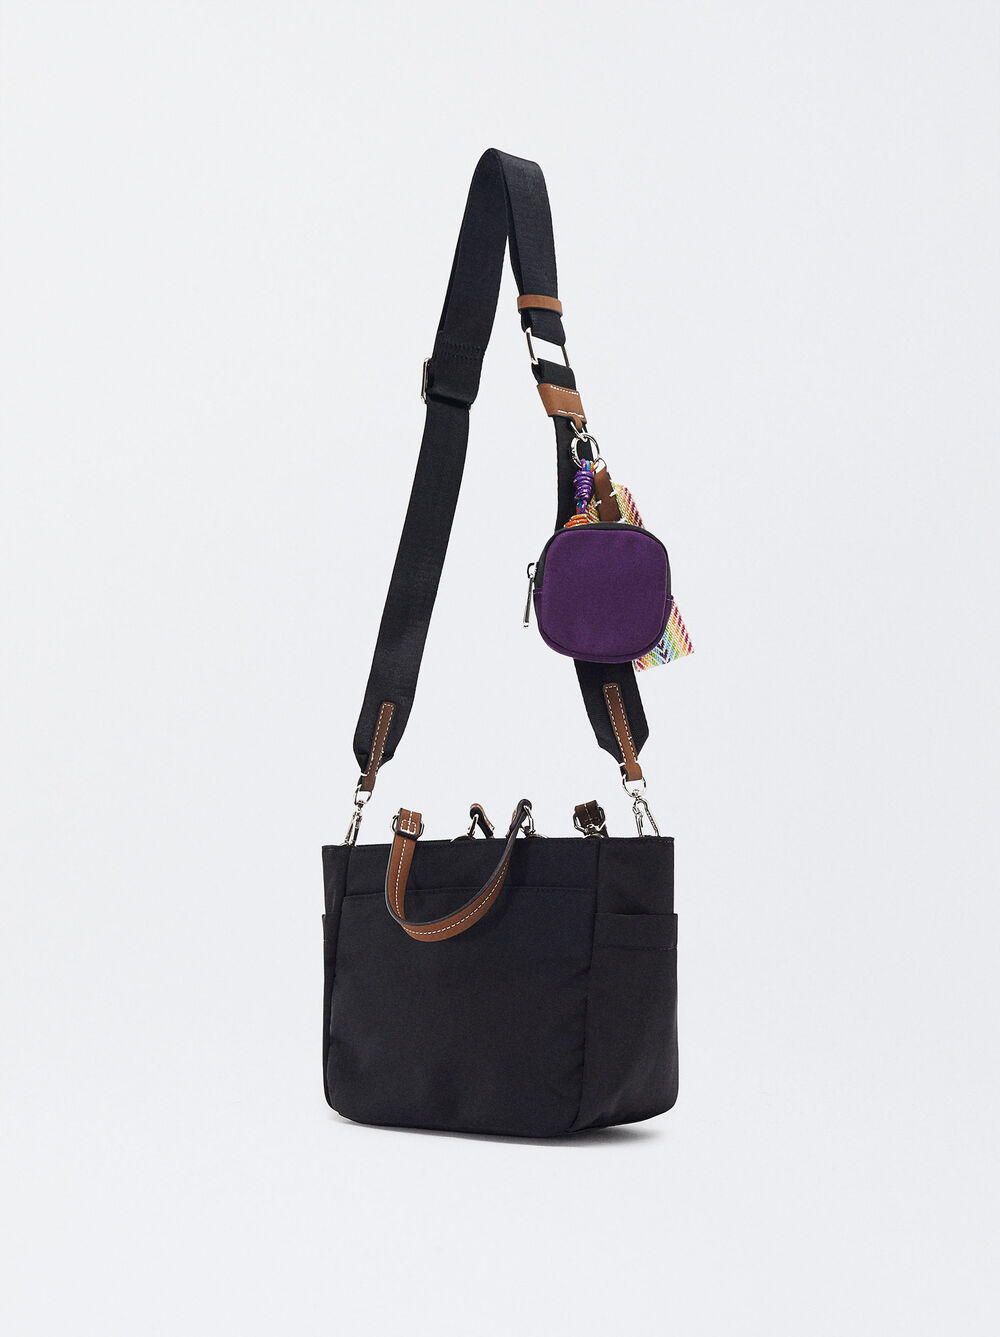 Personalized Nylon Tote Bag